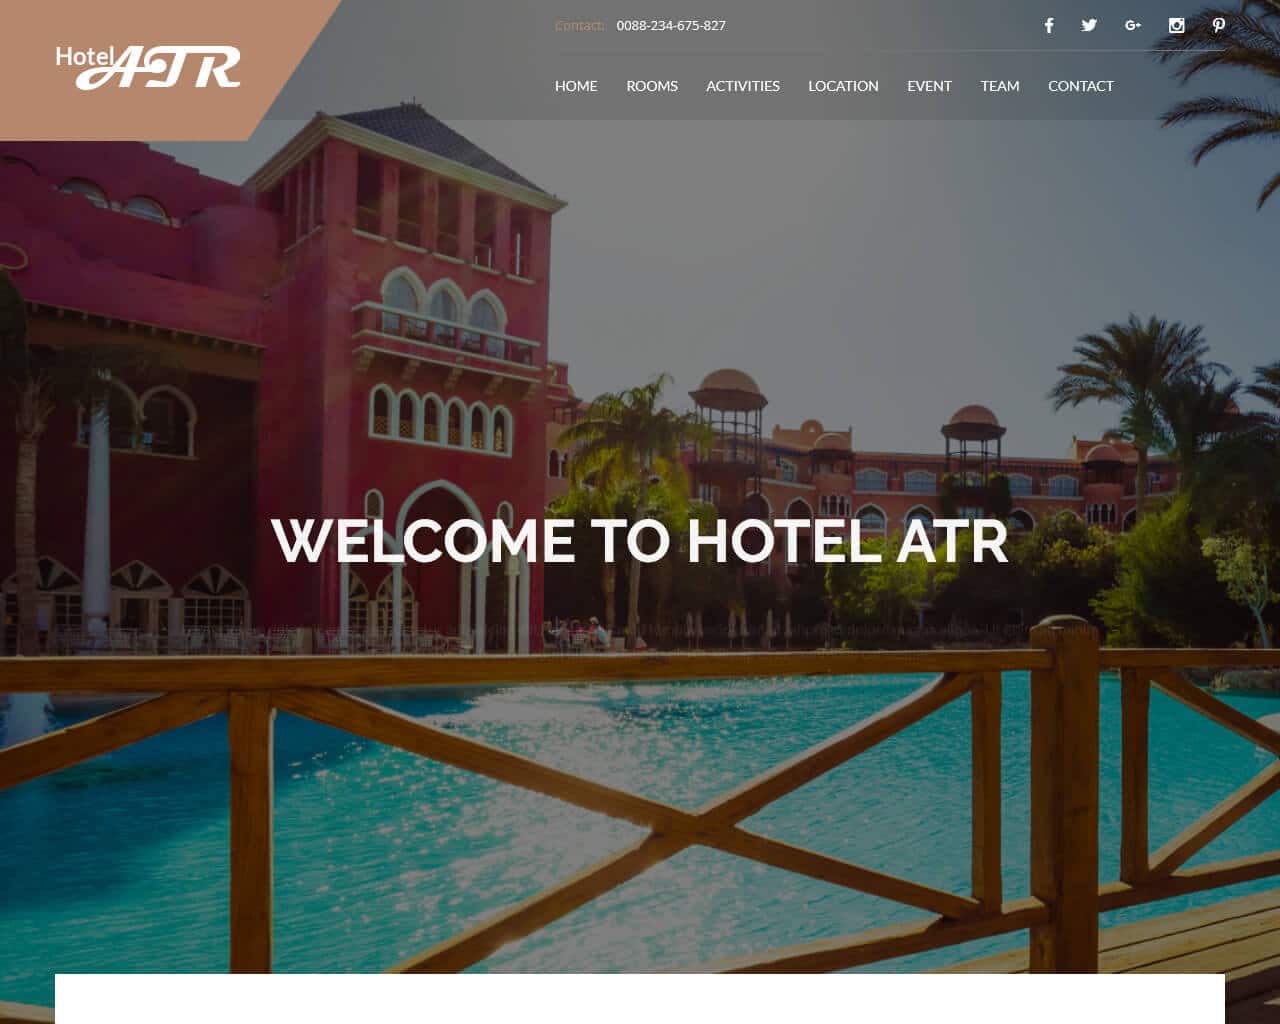 Hotel Atr Website Template